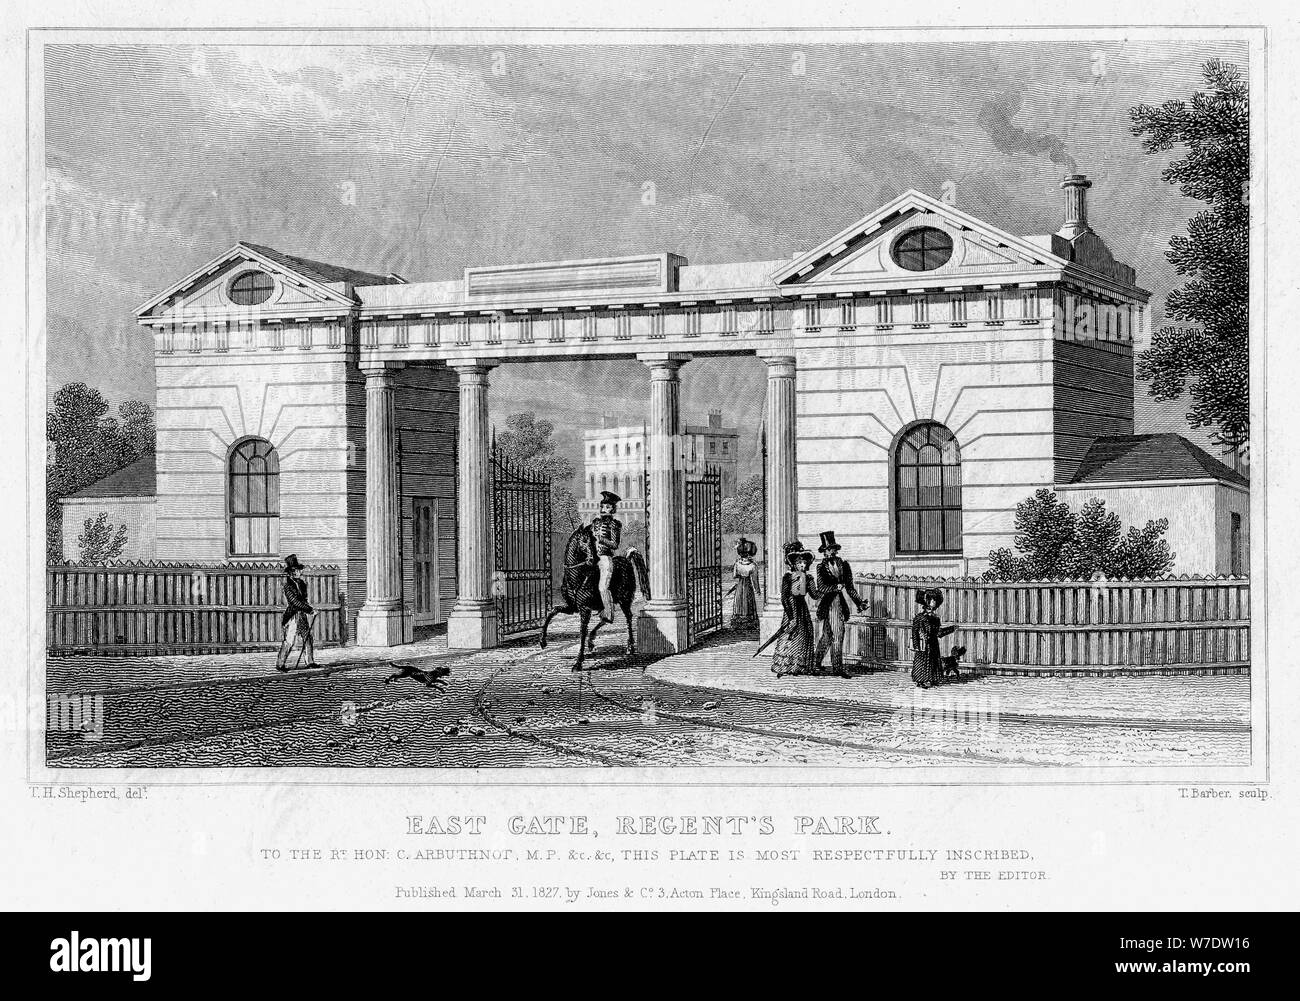 East Gate, Regent's Park, London, 1827.Artist: Thomas Barber Stock Photo